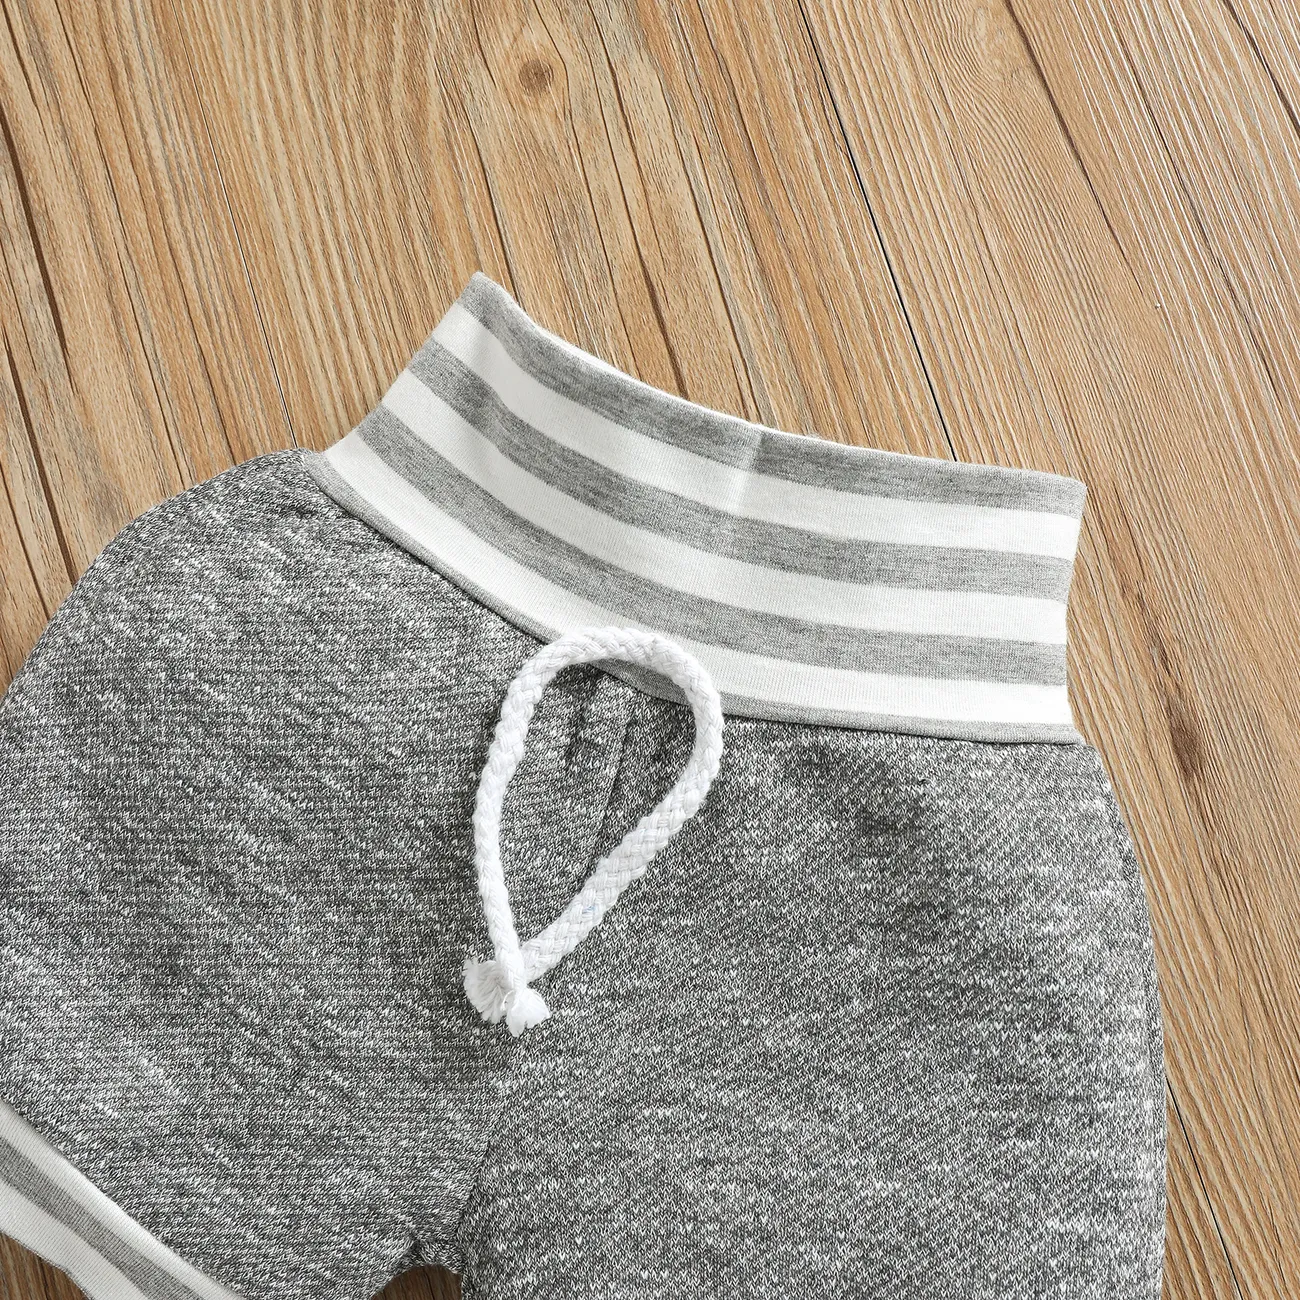 100% Cotton 2pcs Baby Boy/Girl Striped Sleeveless Tank Top and Shorts Set Dark Grey big image 1